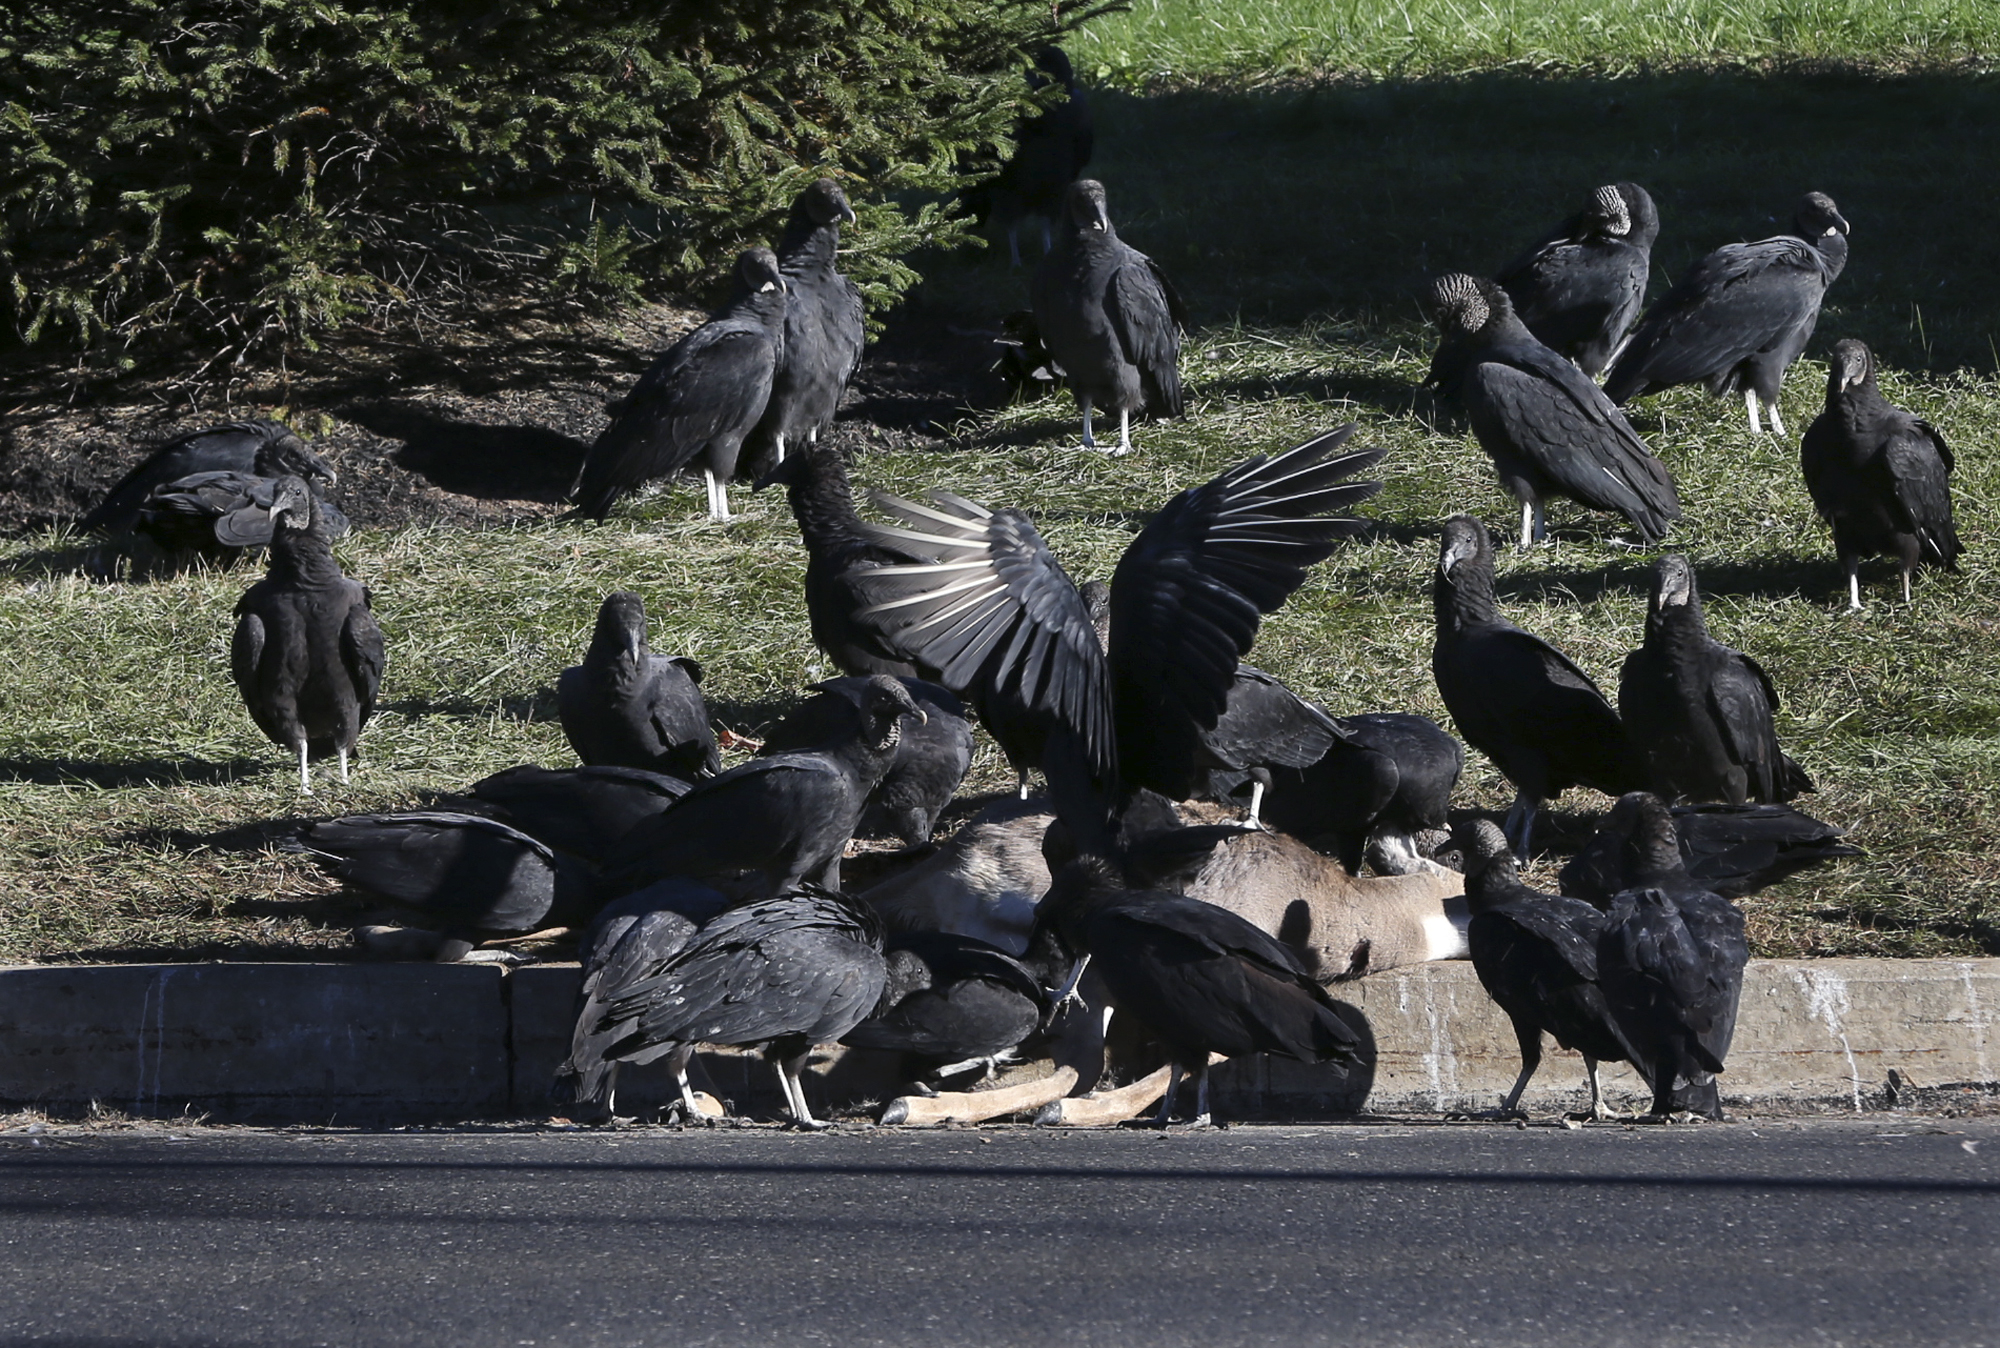 Turkey vultures dead deer road kill Newtown PA